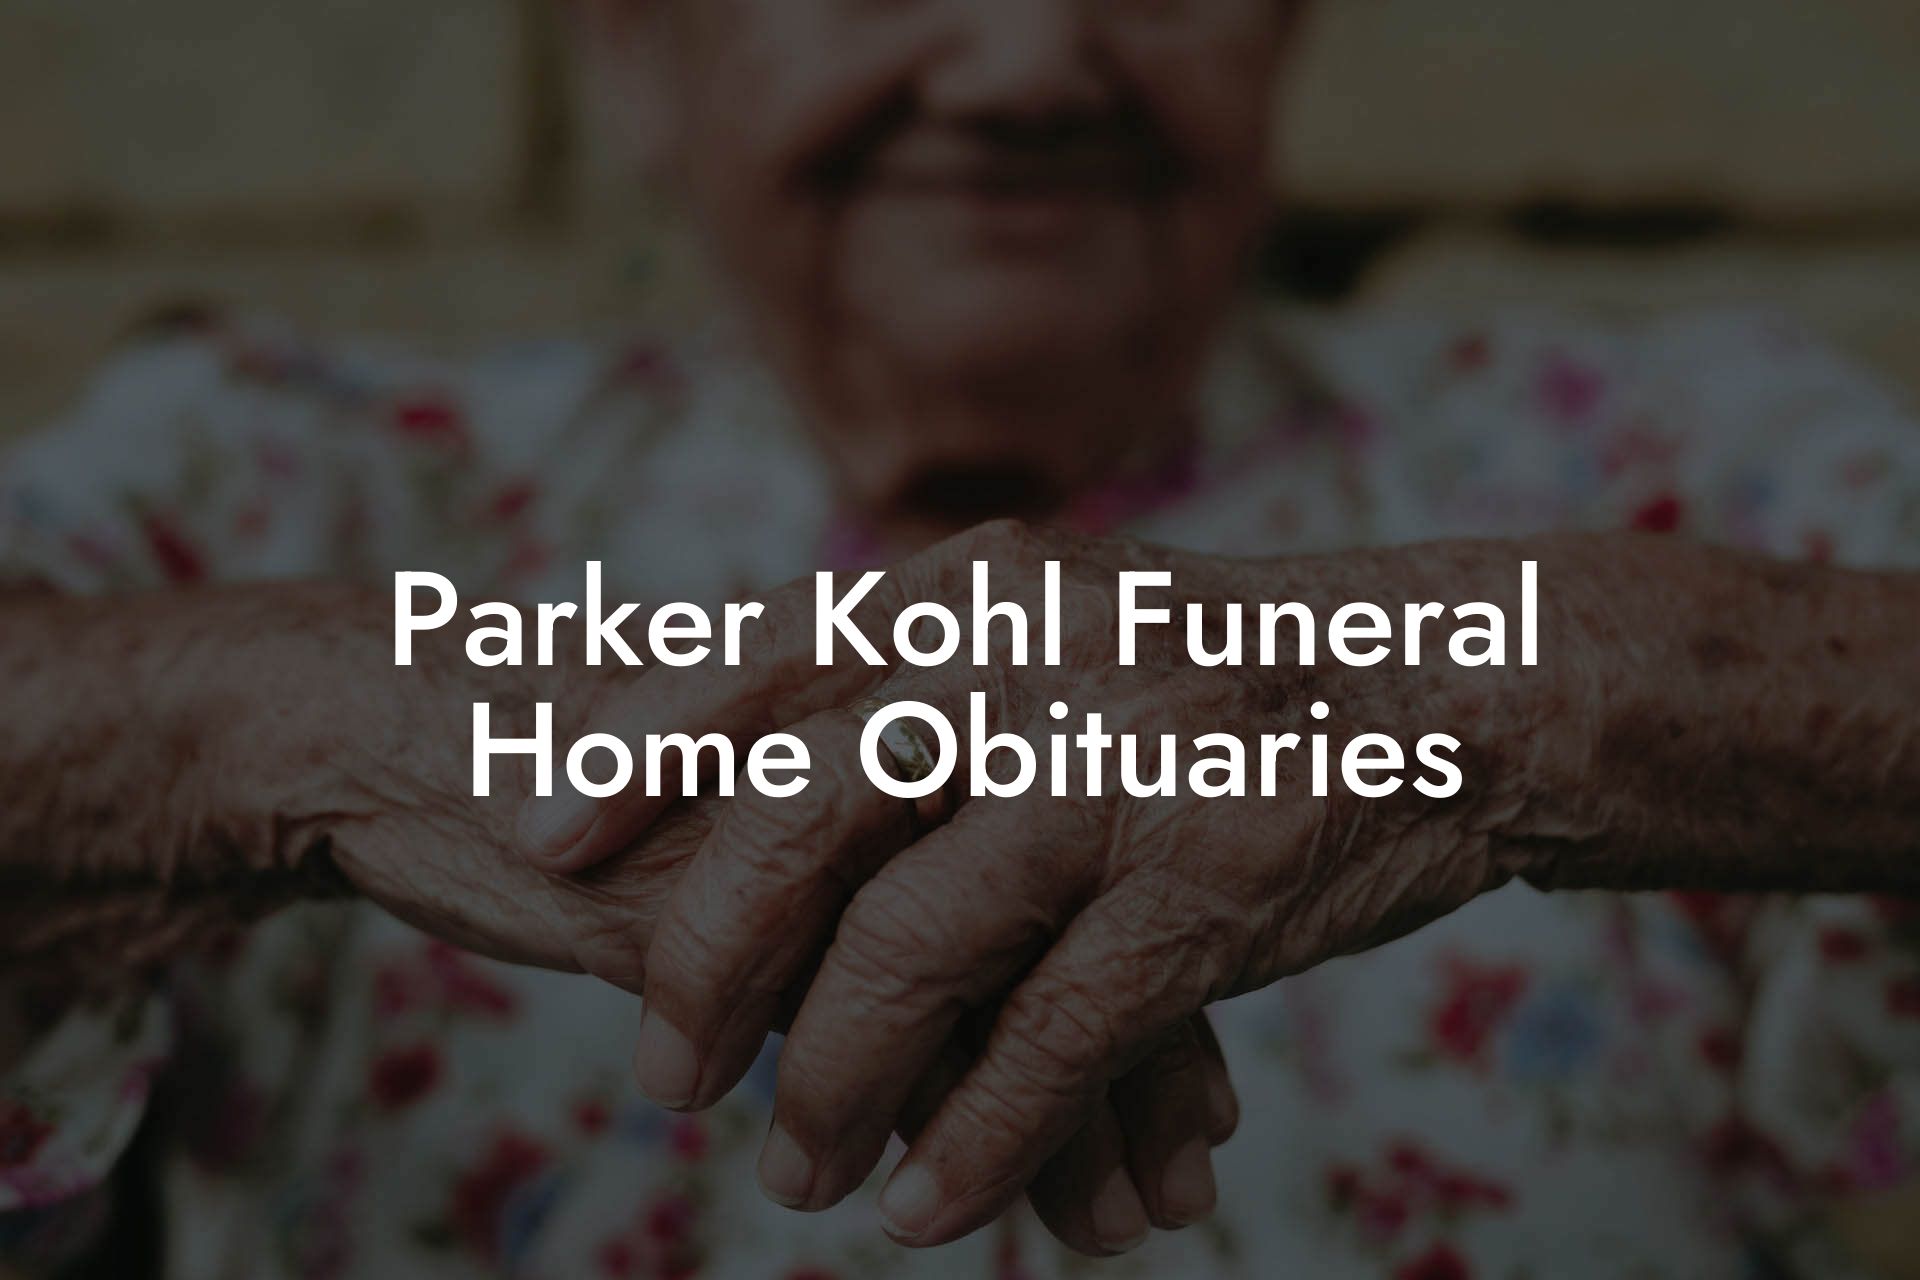 Parker Kohl Funeral Home Obituaries